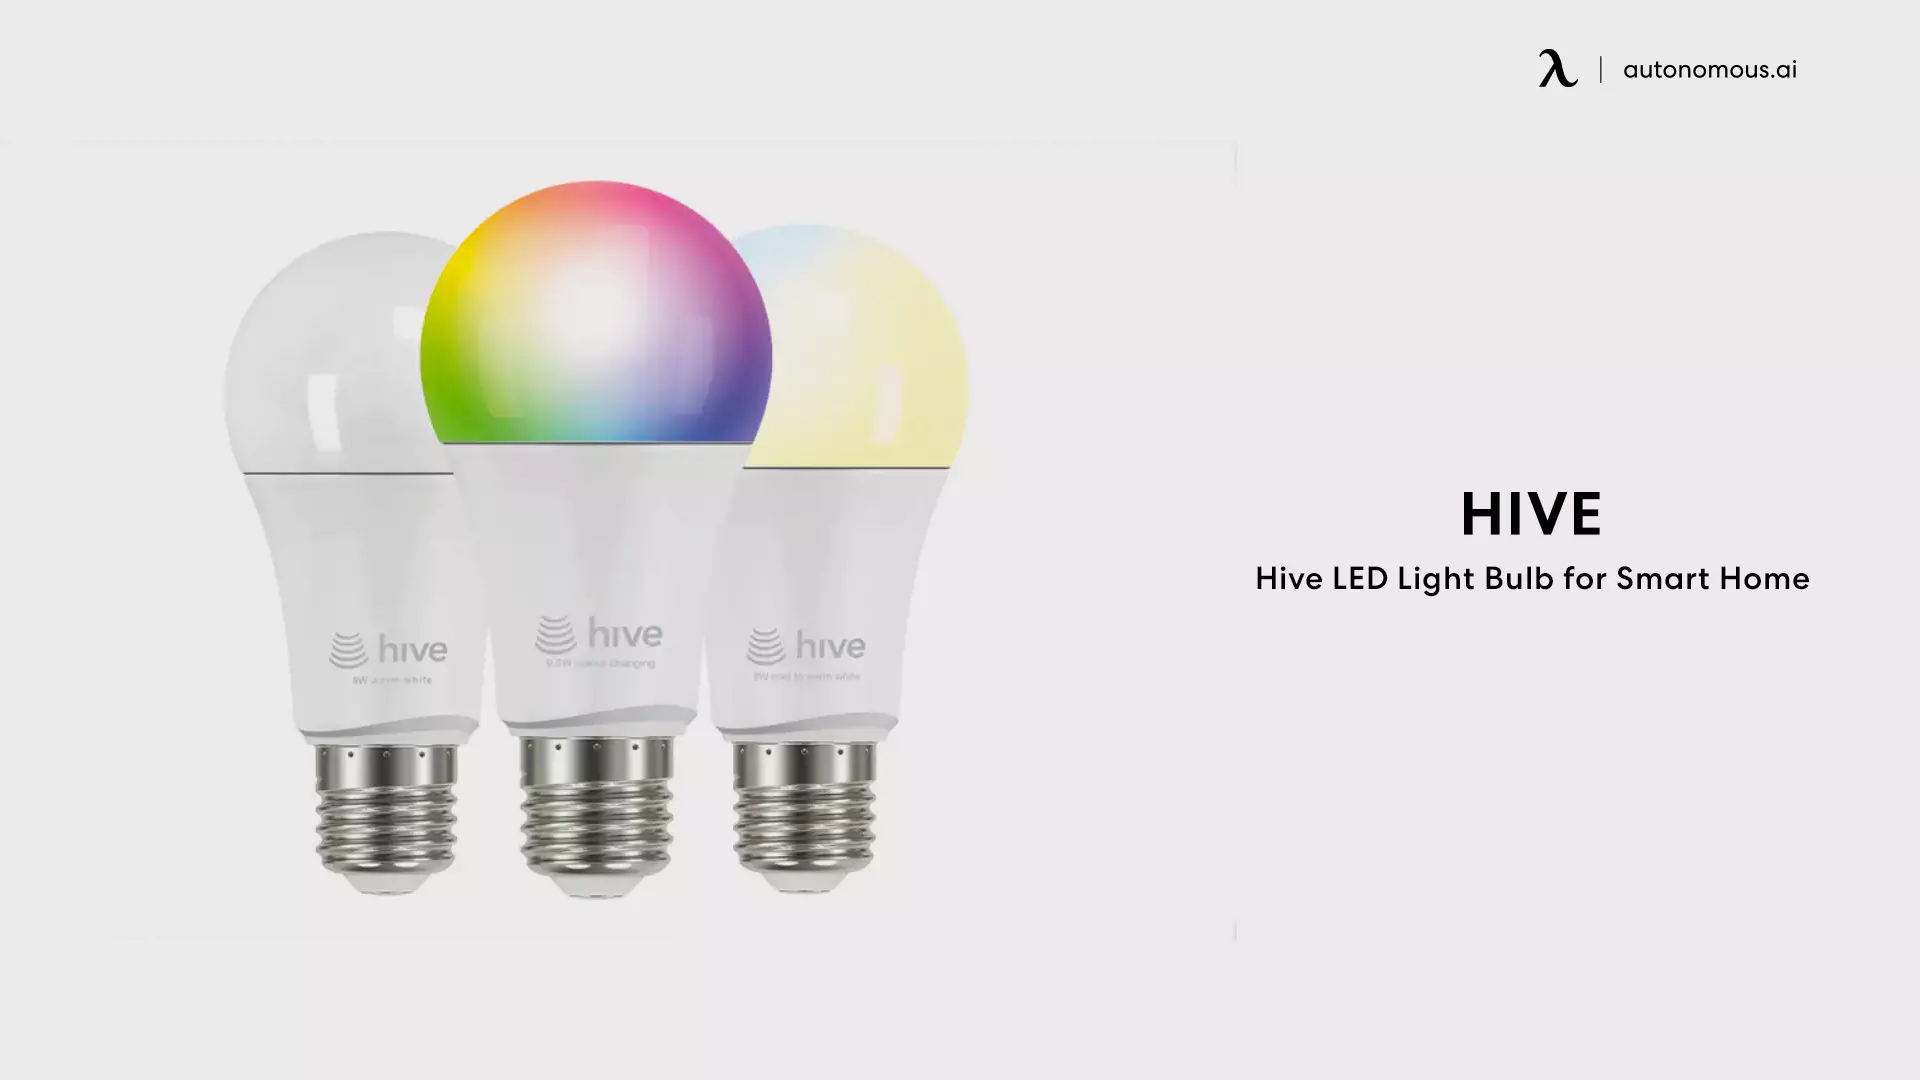 Hive LED Light Bulb for Smart Home